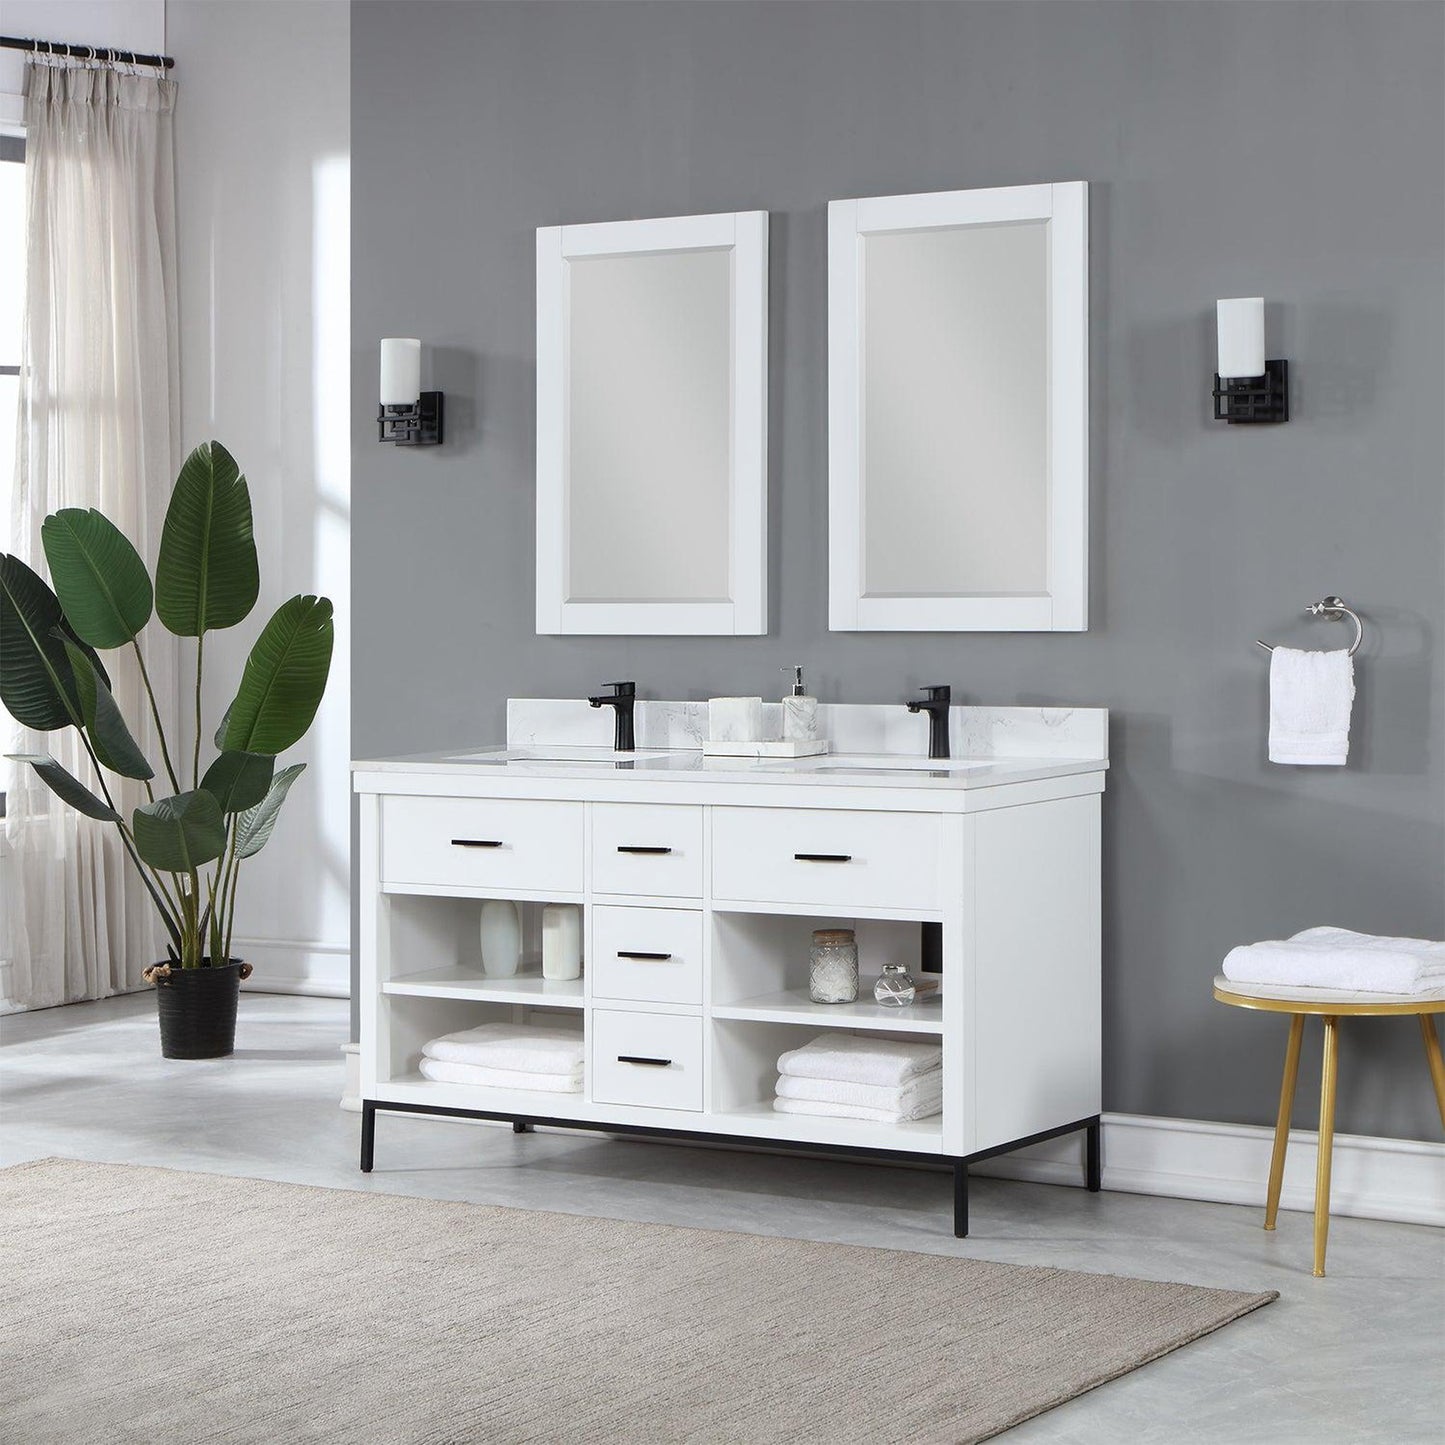 Altair Kesia 60" White Freestanding Double Bathroom Vanity Set With Mirror, Stylish Aosta White Composite Stone Top, Two Rectangular Undermount Ceramic Sinks, Overflow, and Backsplash